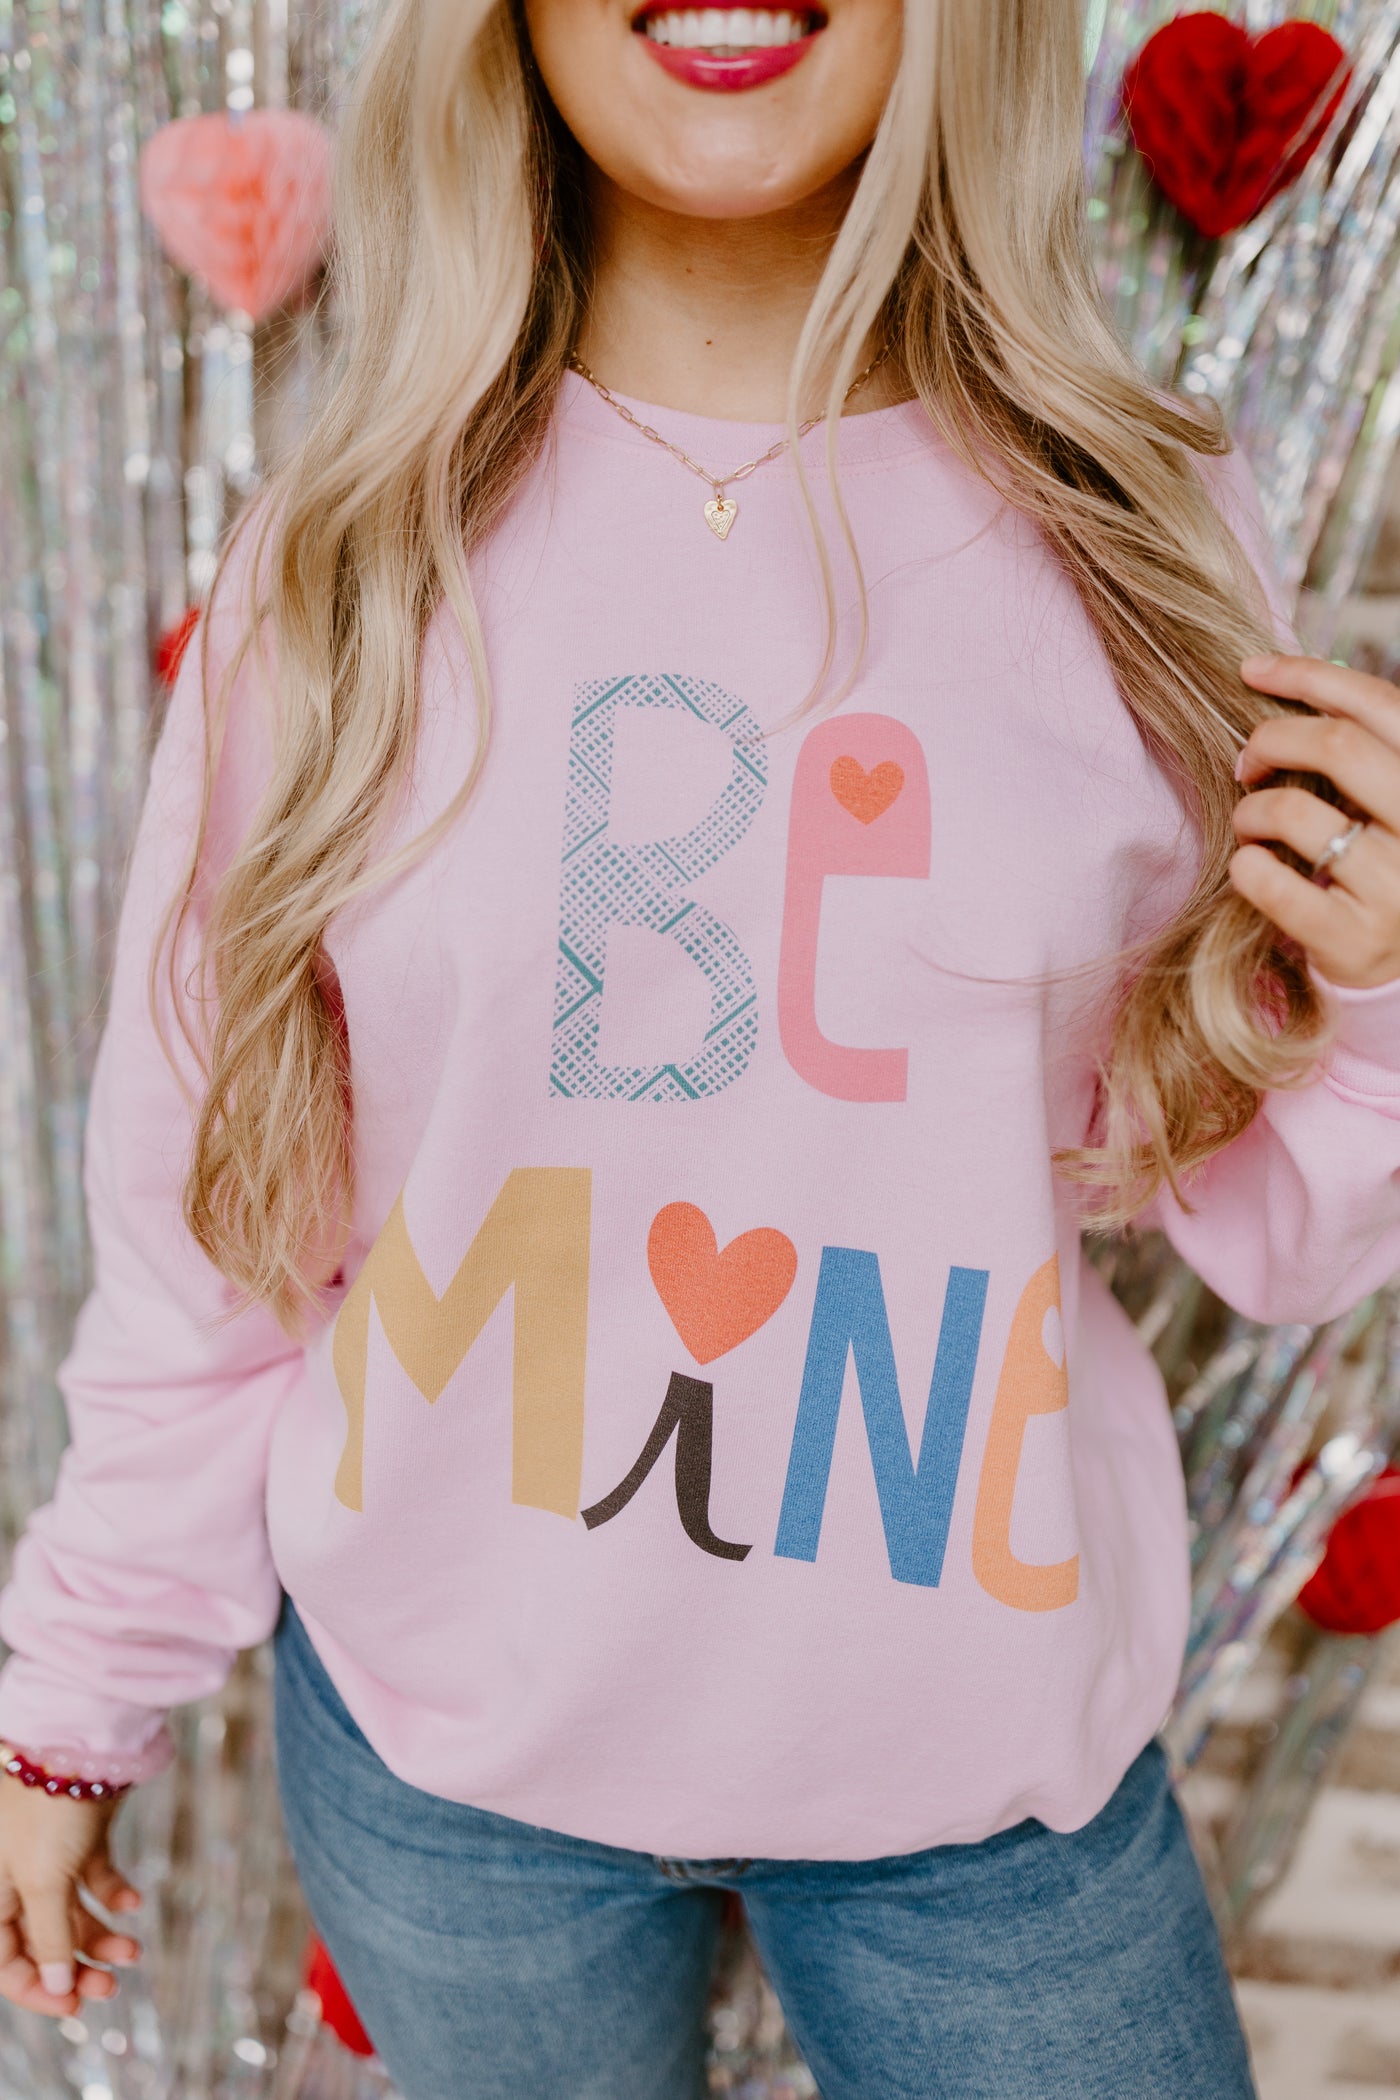 Baby Pink Be Mine Graphic Sweatshirt